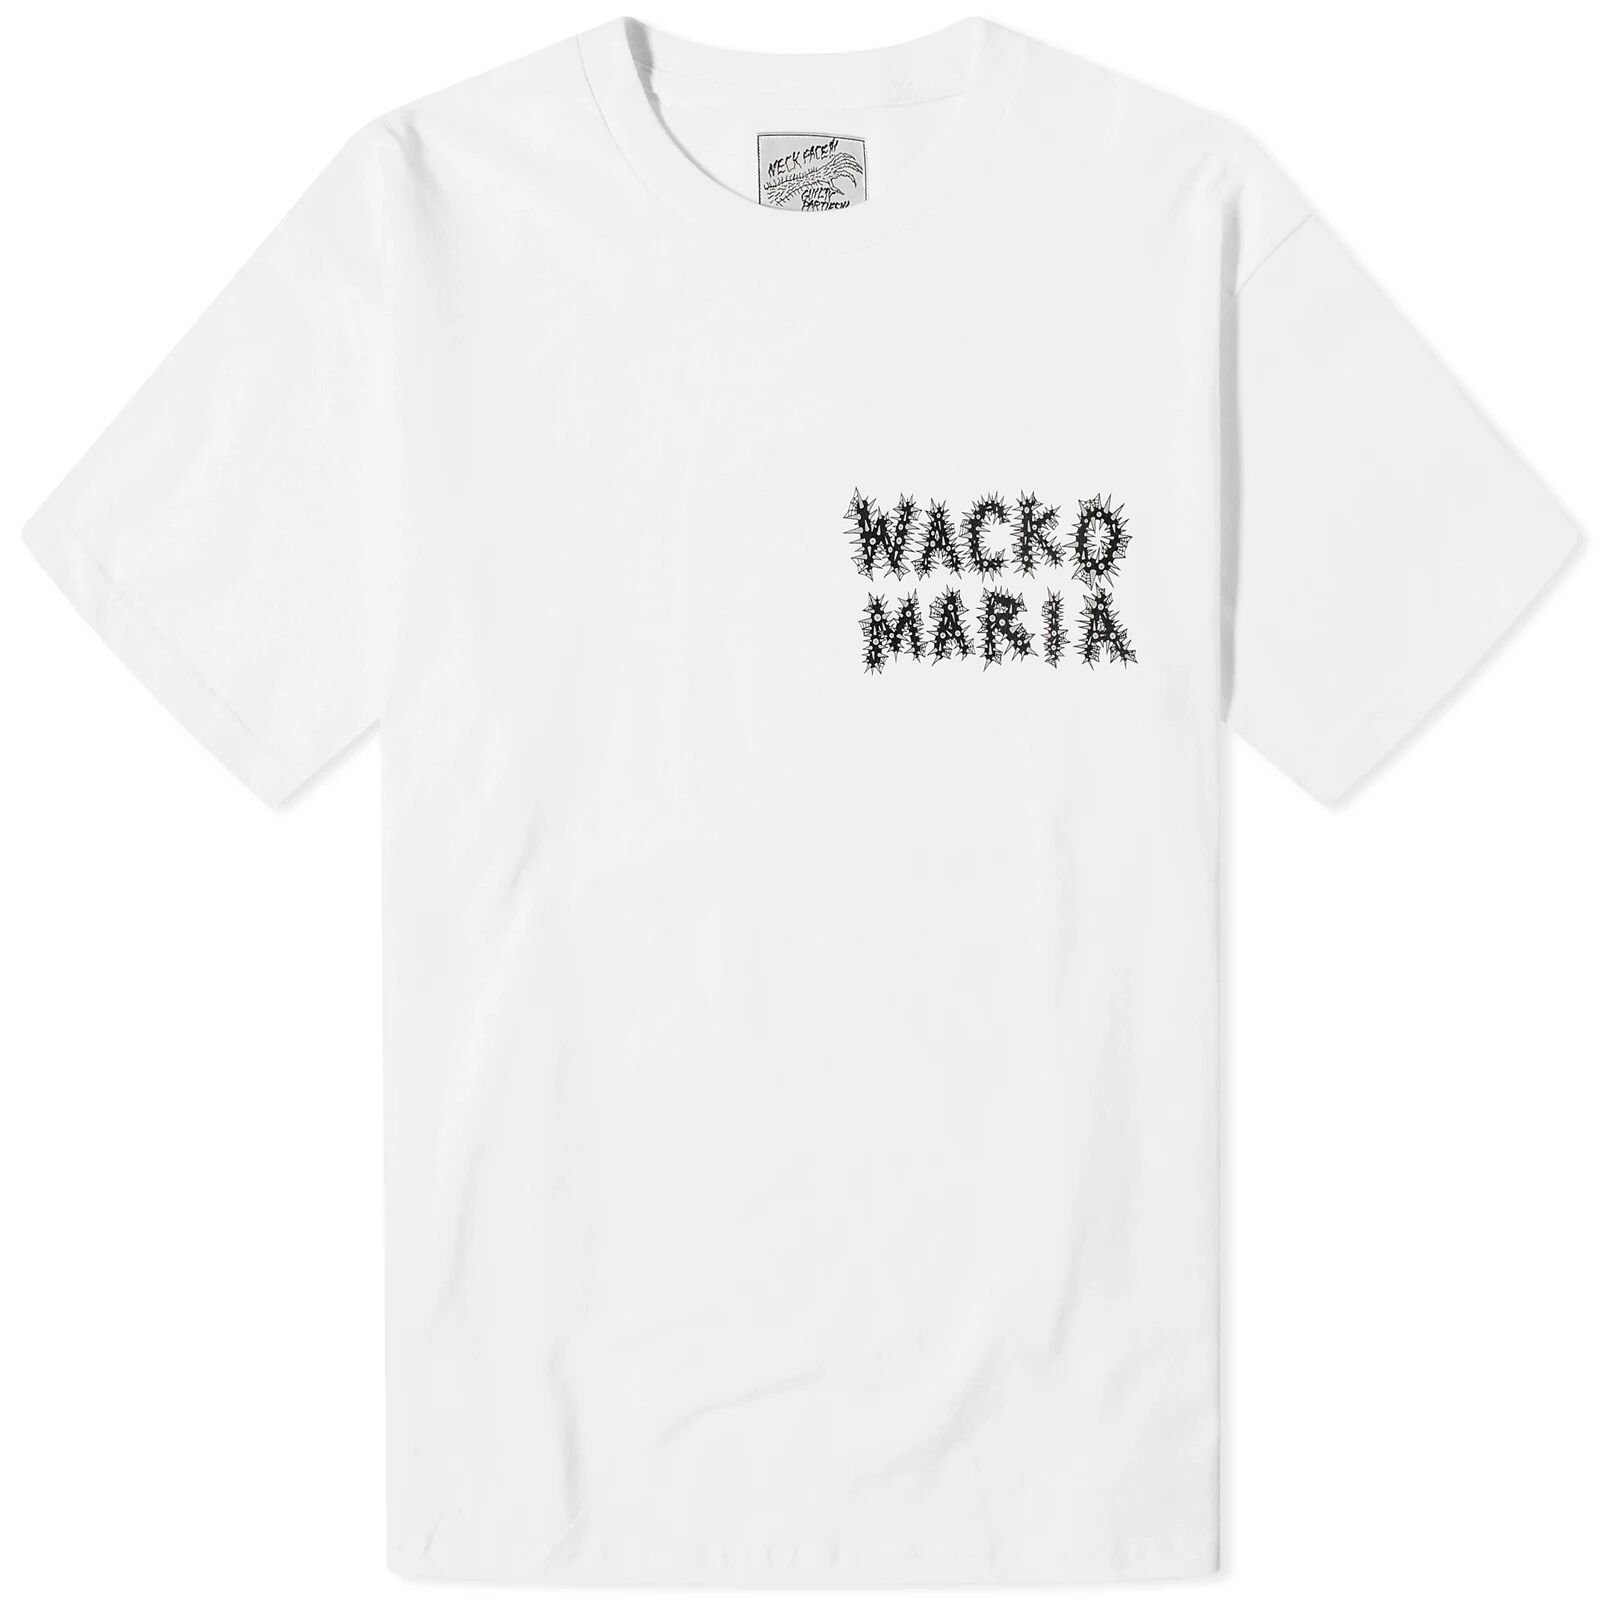 Wacko Maria Men's x Neckface Type 5 T-Shirt in White, Size Small